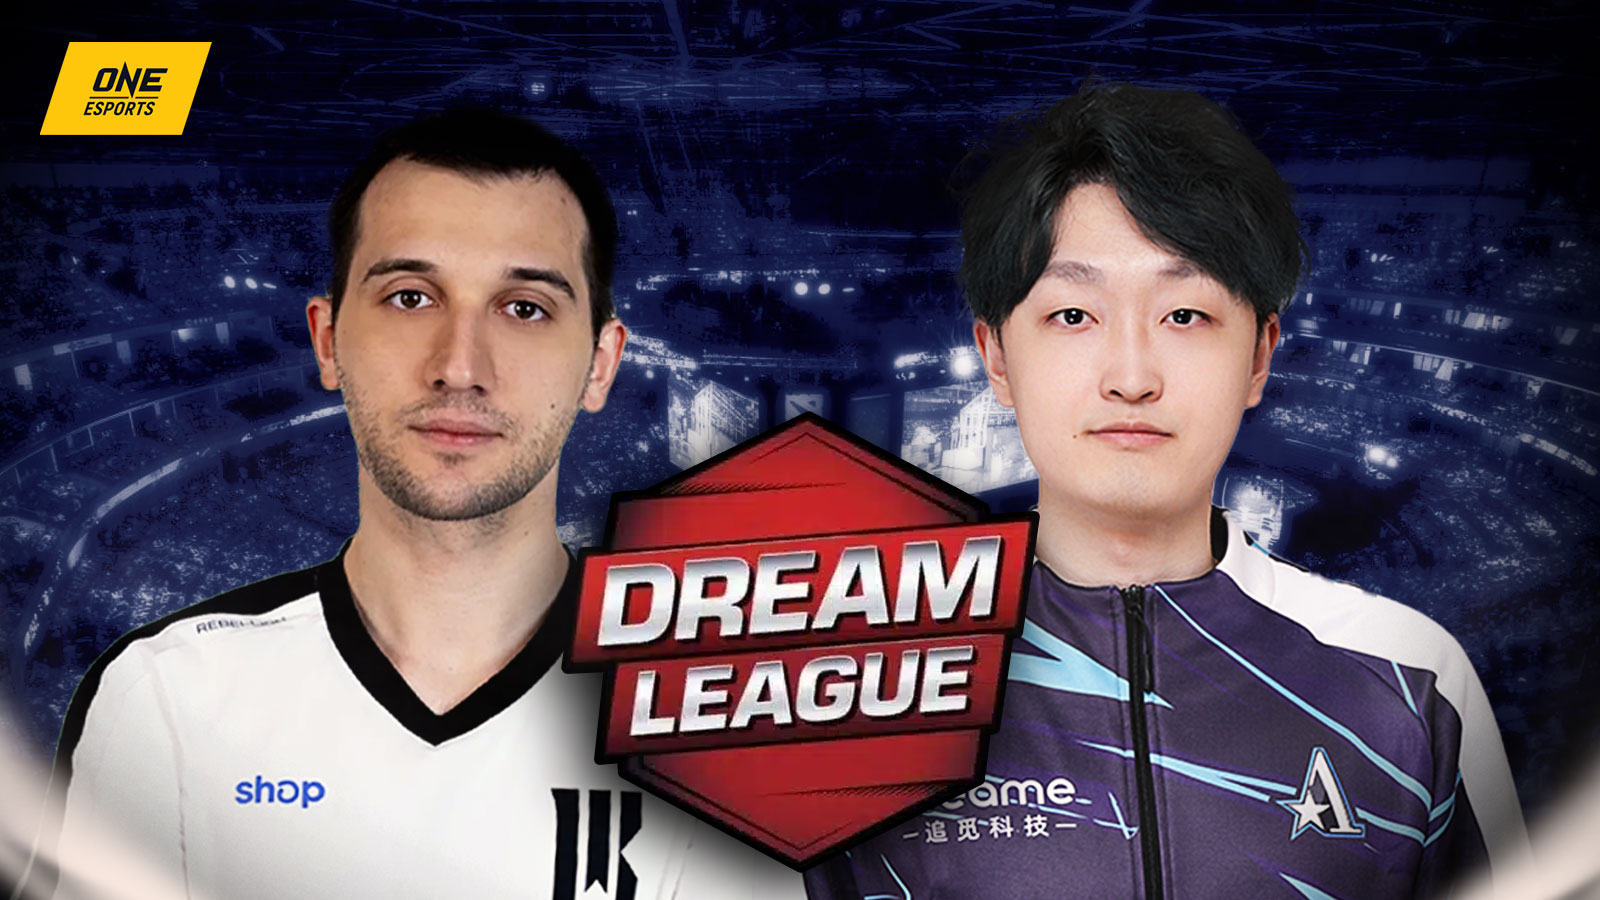 3/3 Dream Team stream!